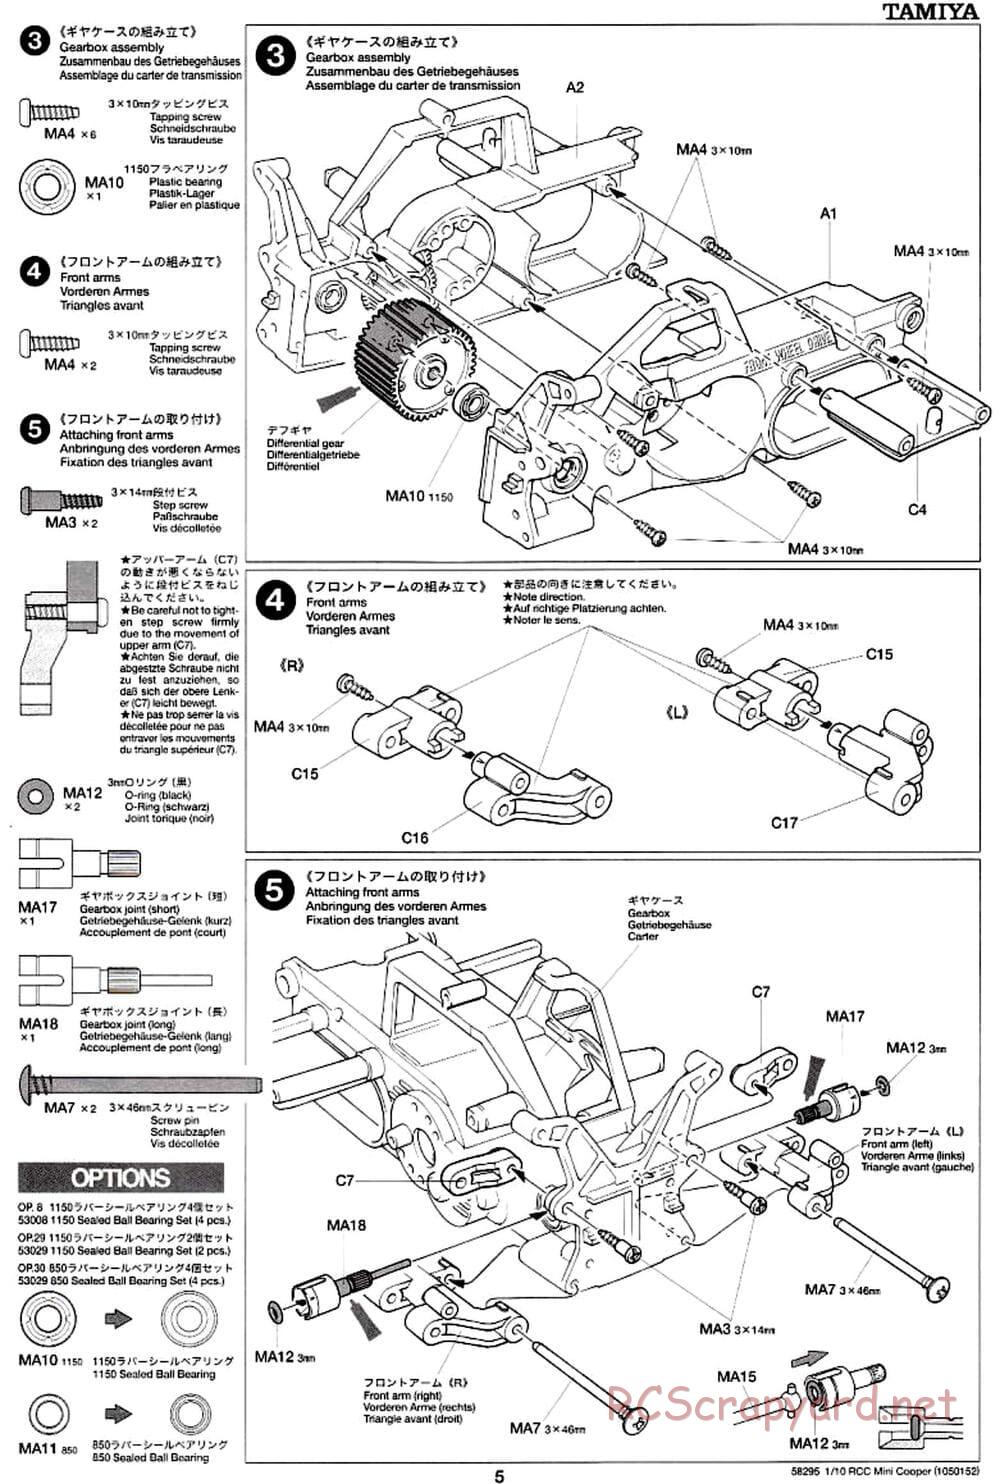 Tamiya - Mini Cooper - M03L Chassis - Manual - Page 4